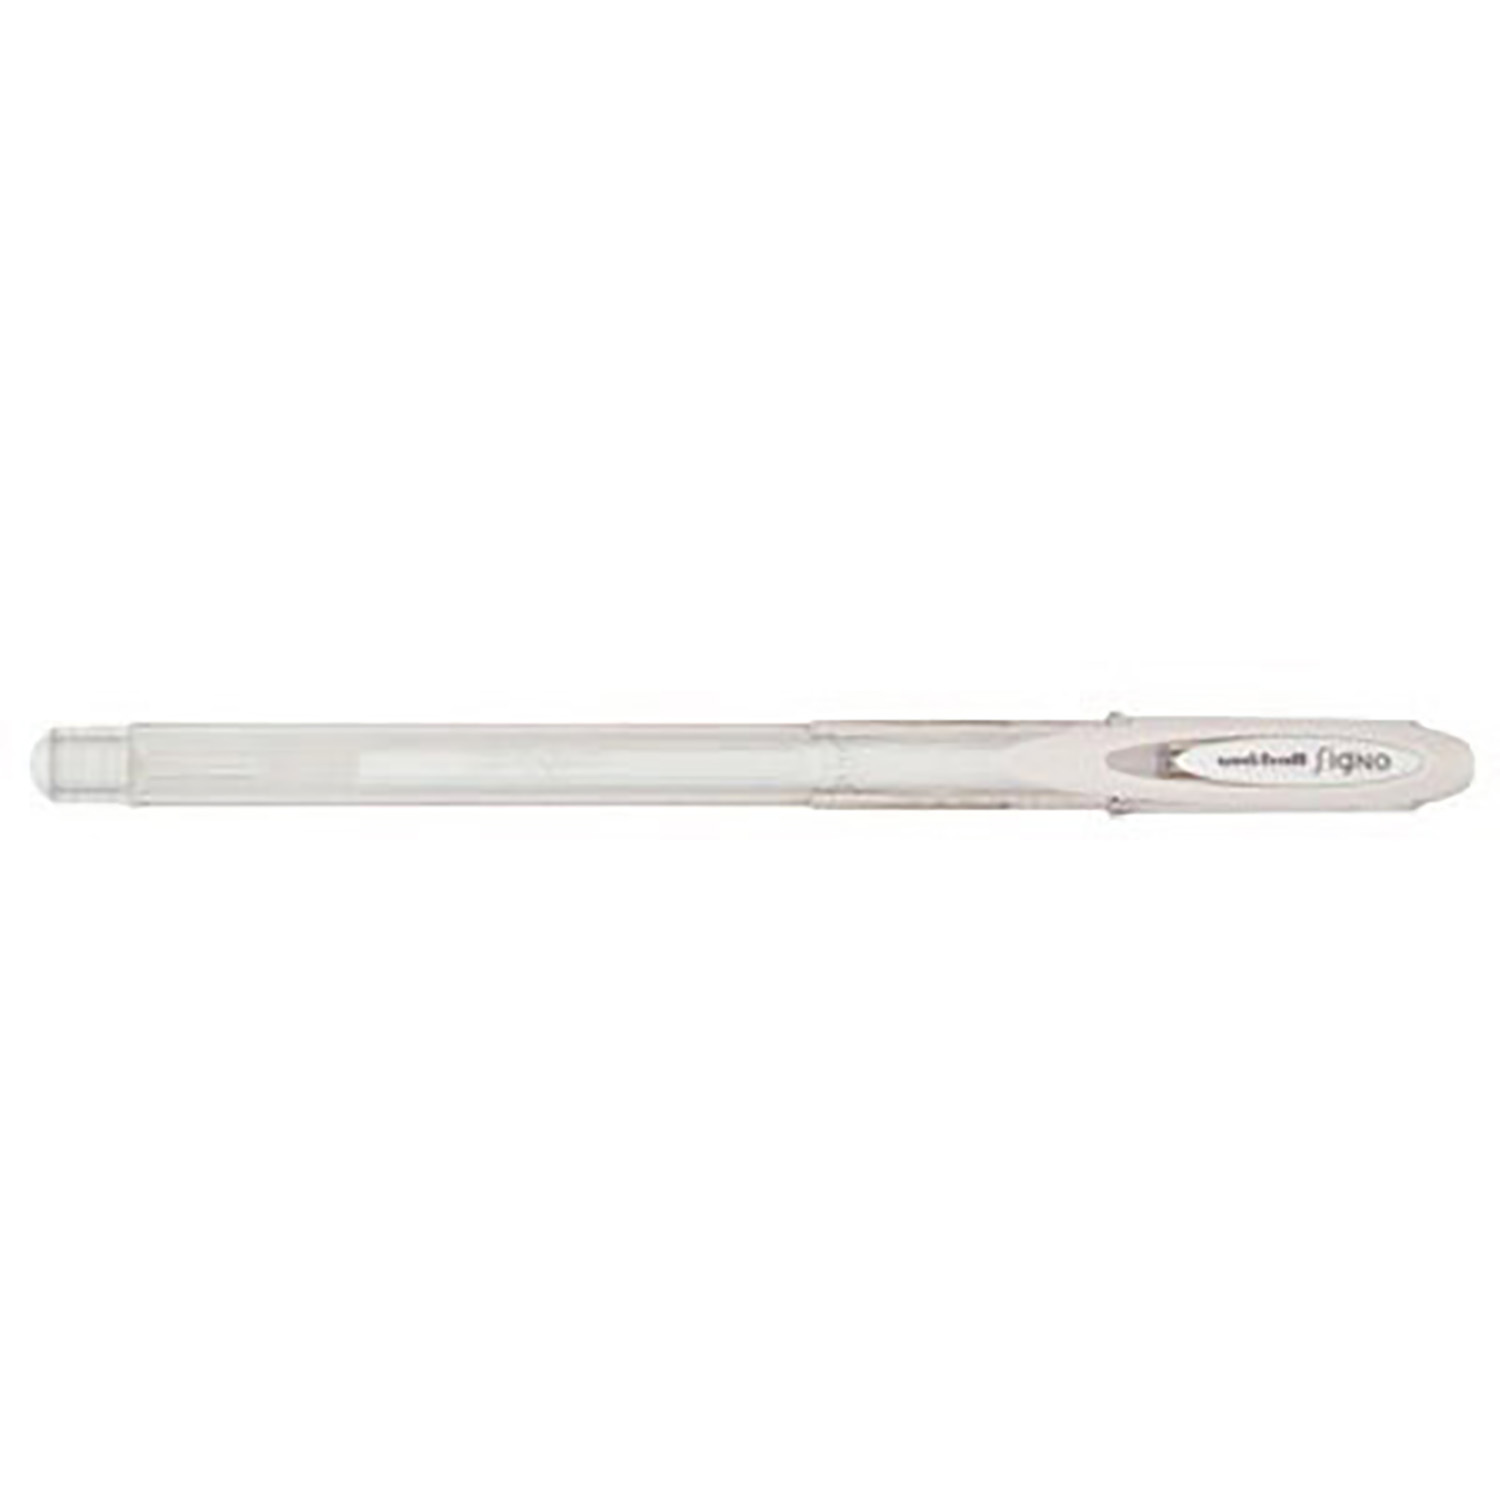 Uniball Signo UM120 Rollerball Pen - White Image 2